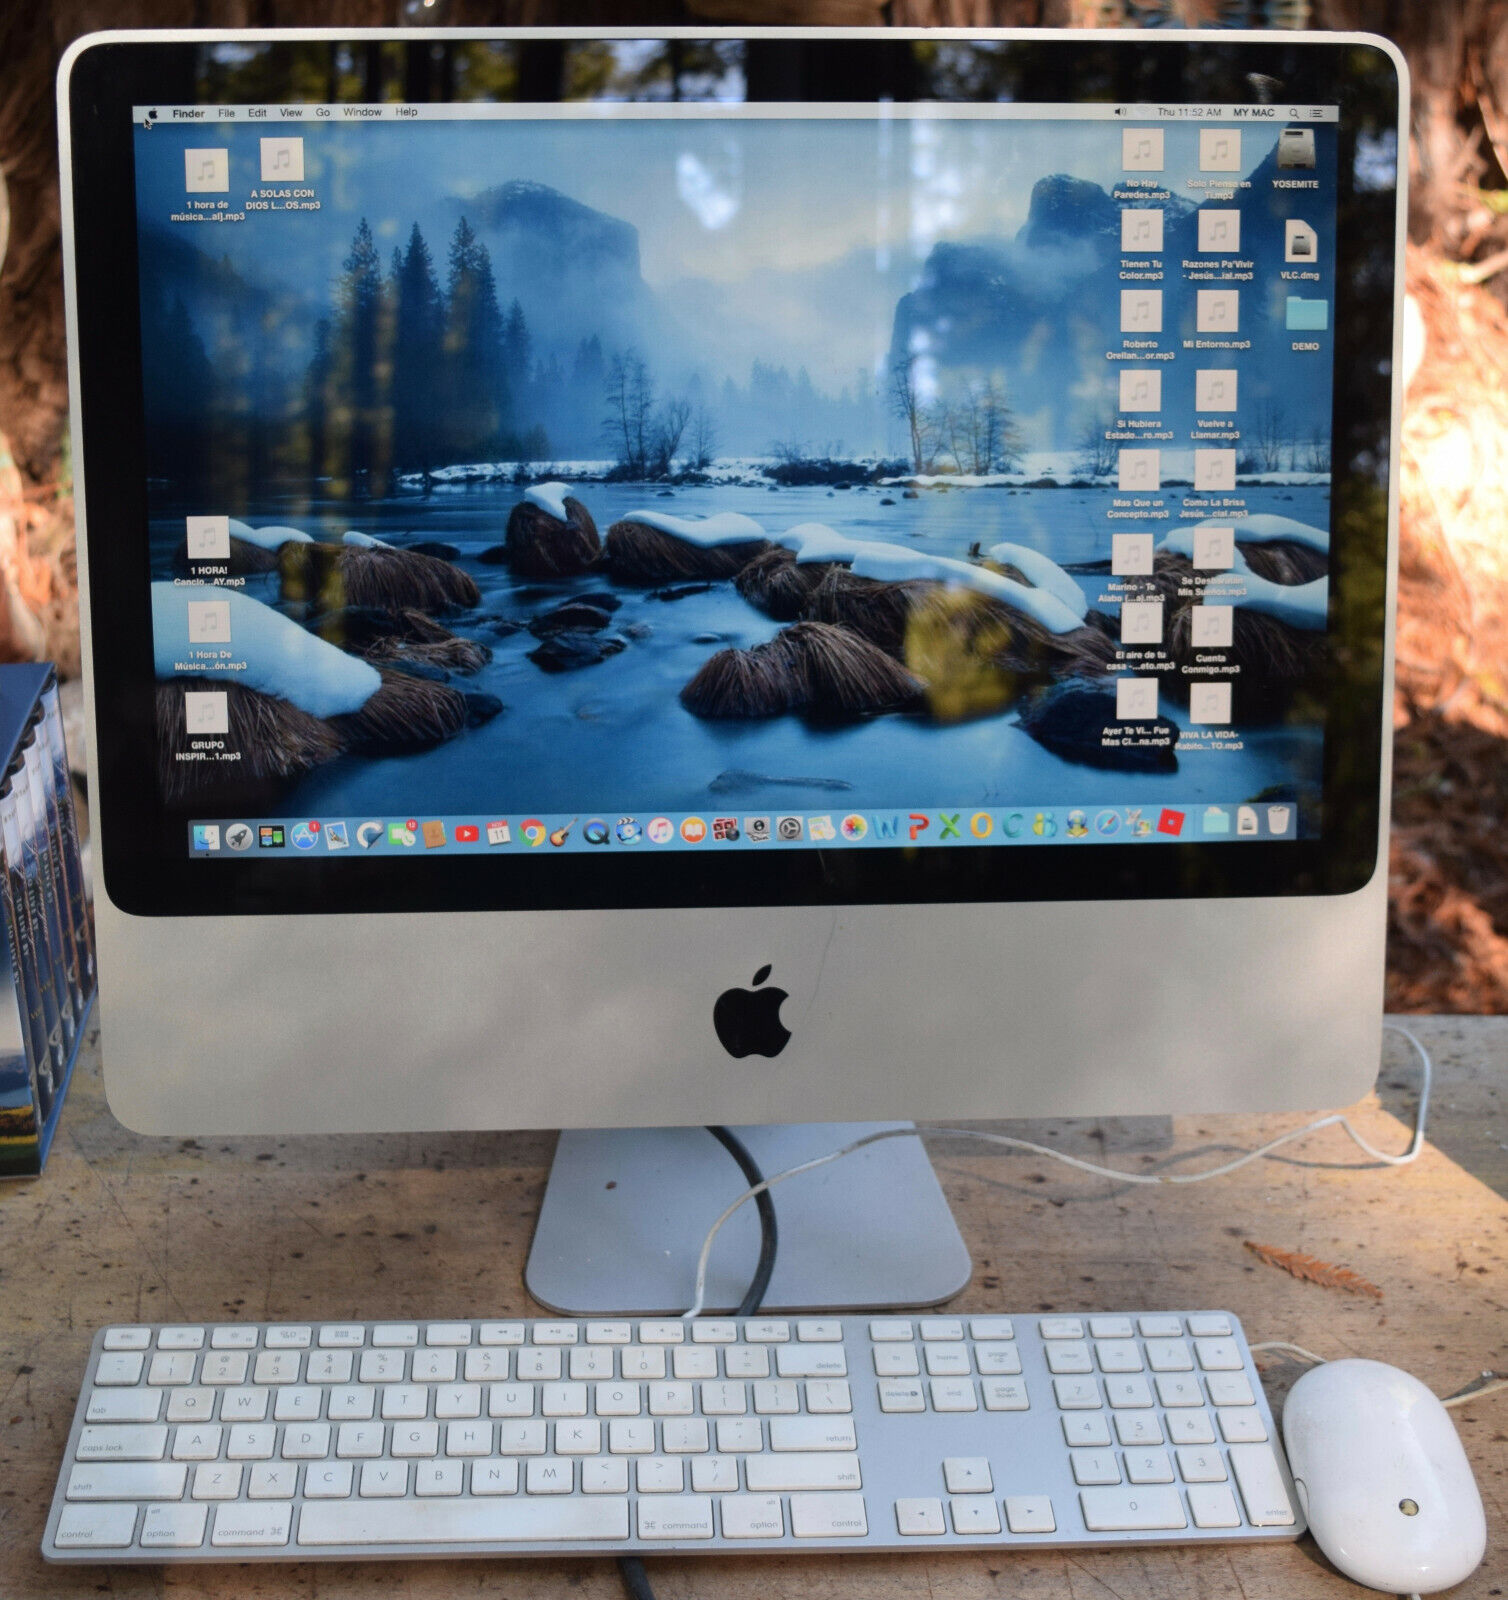 Apple A1224 iMac 20